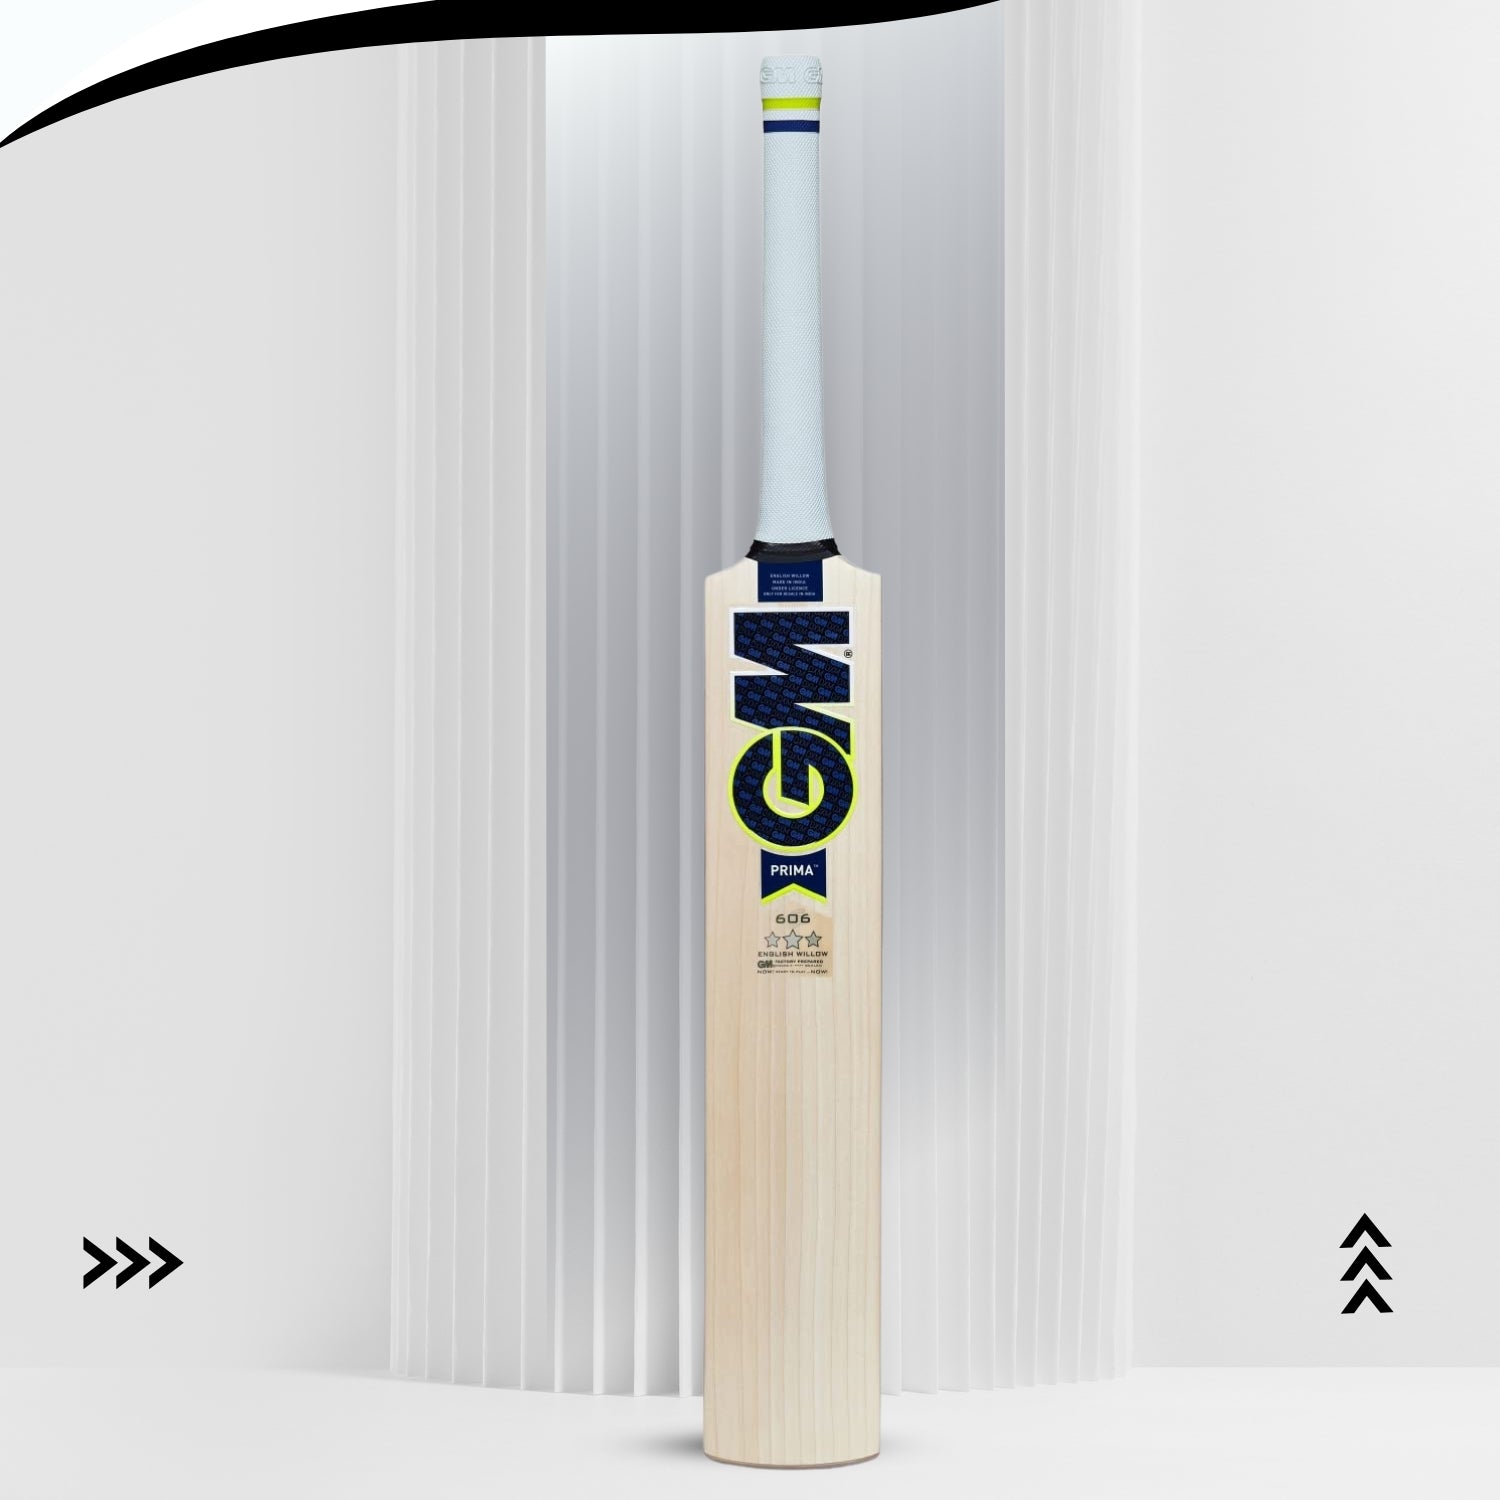 GM Prima 606 English Willow Cricket Bat - Best Price online Prokicksports.com